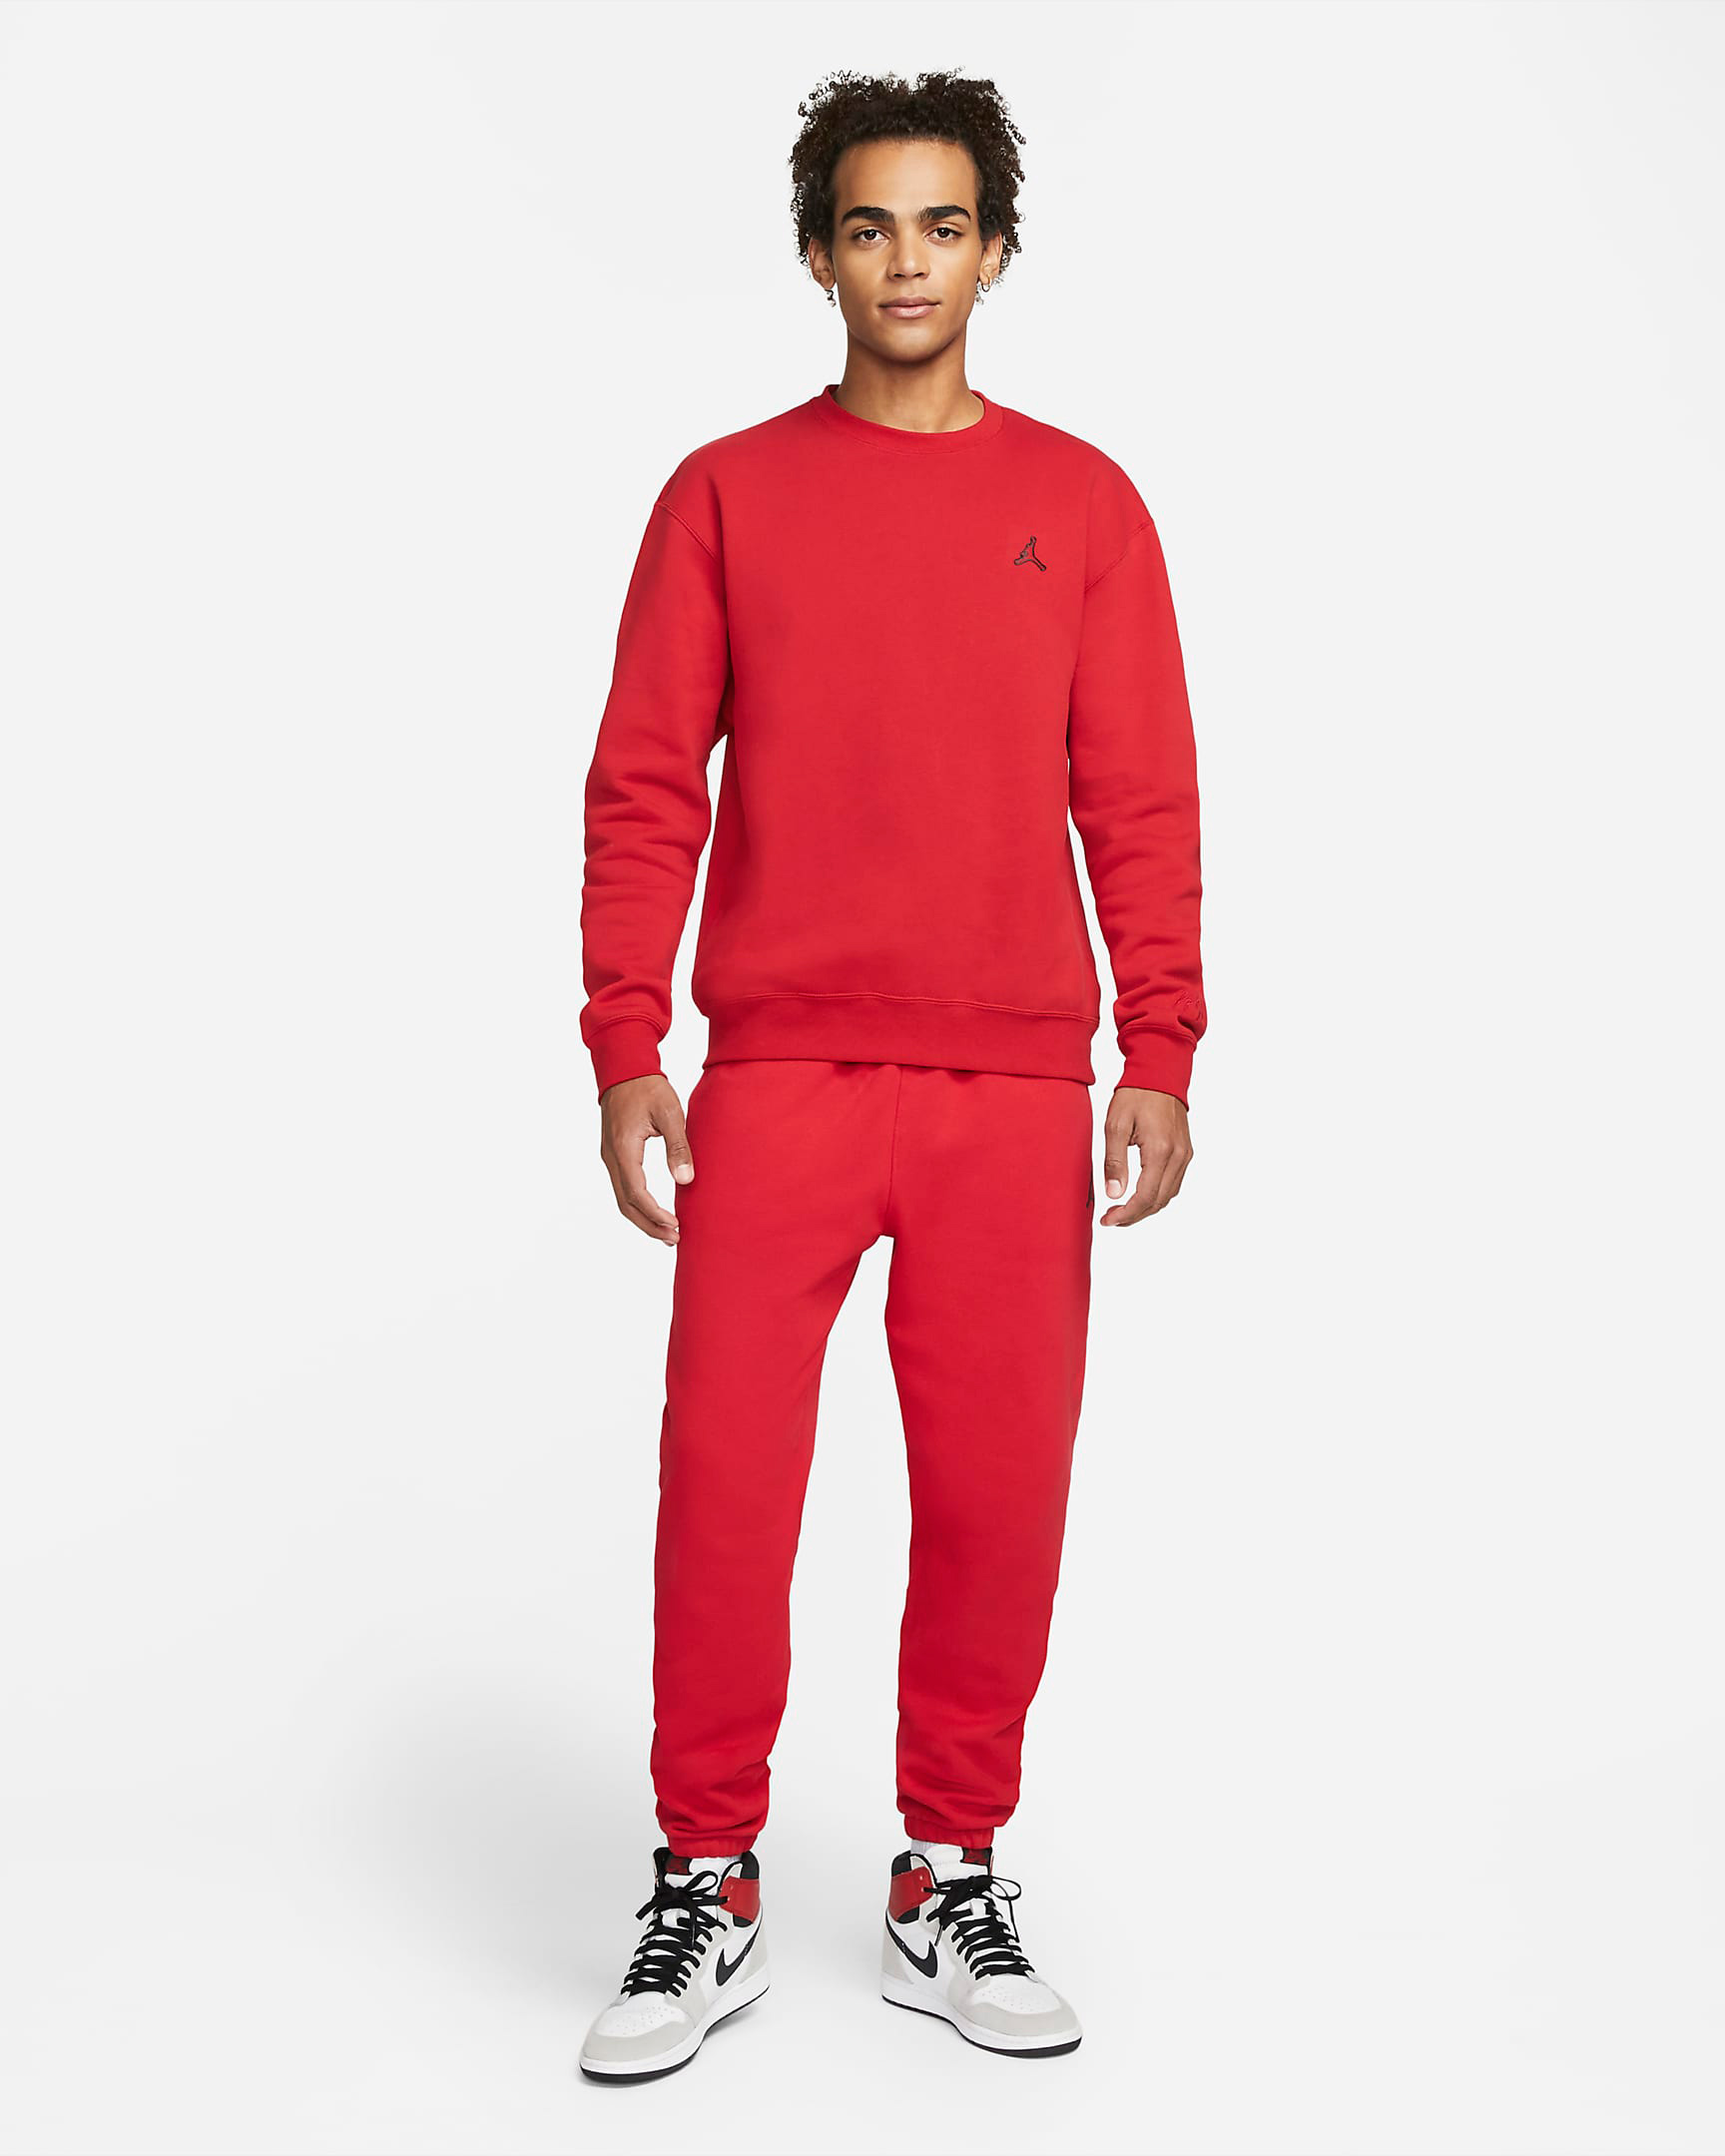 jordan-gym-red-sweatshirt-pants-outfit